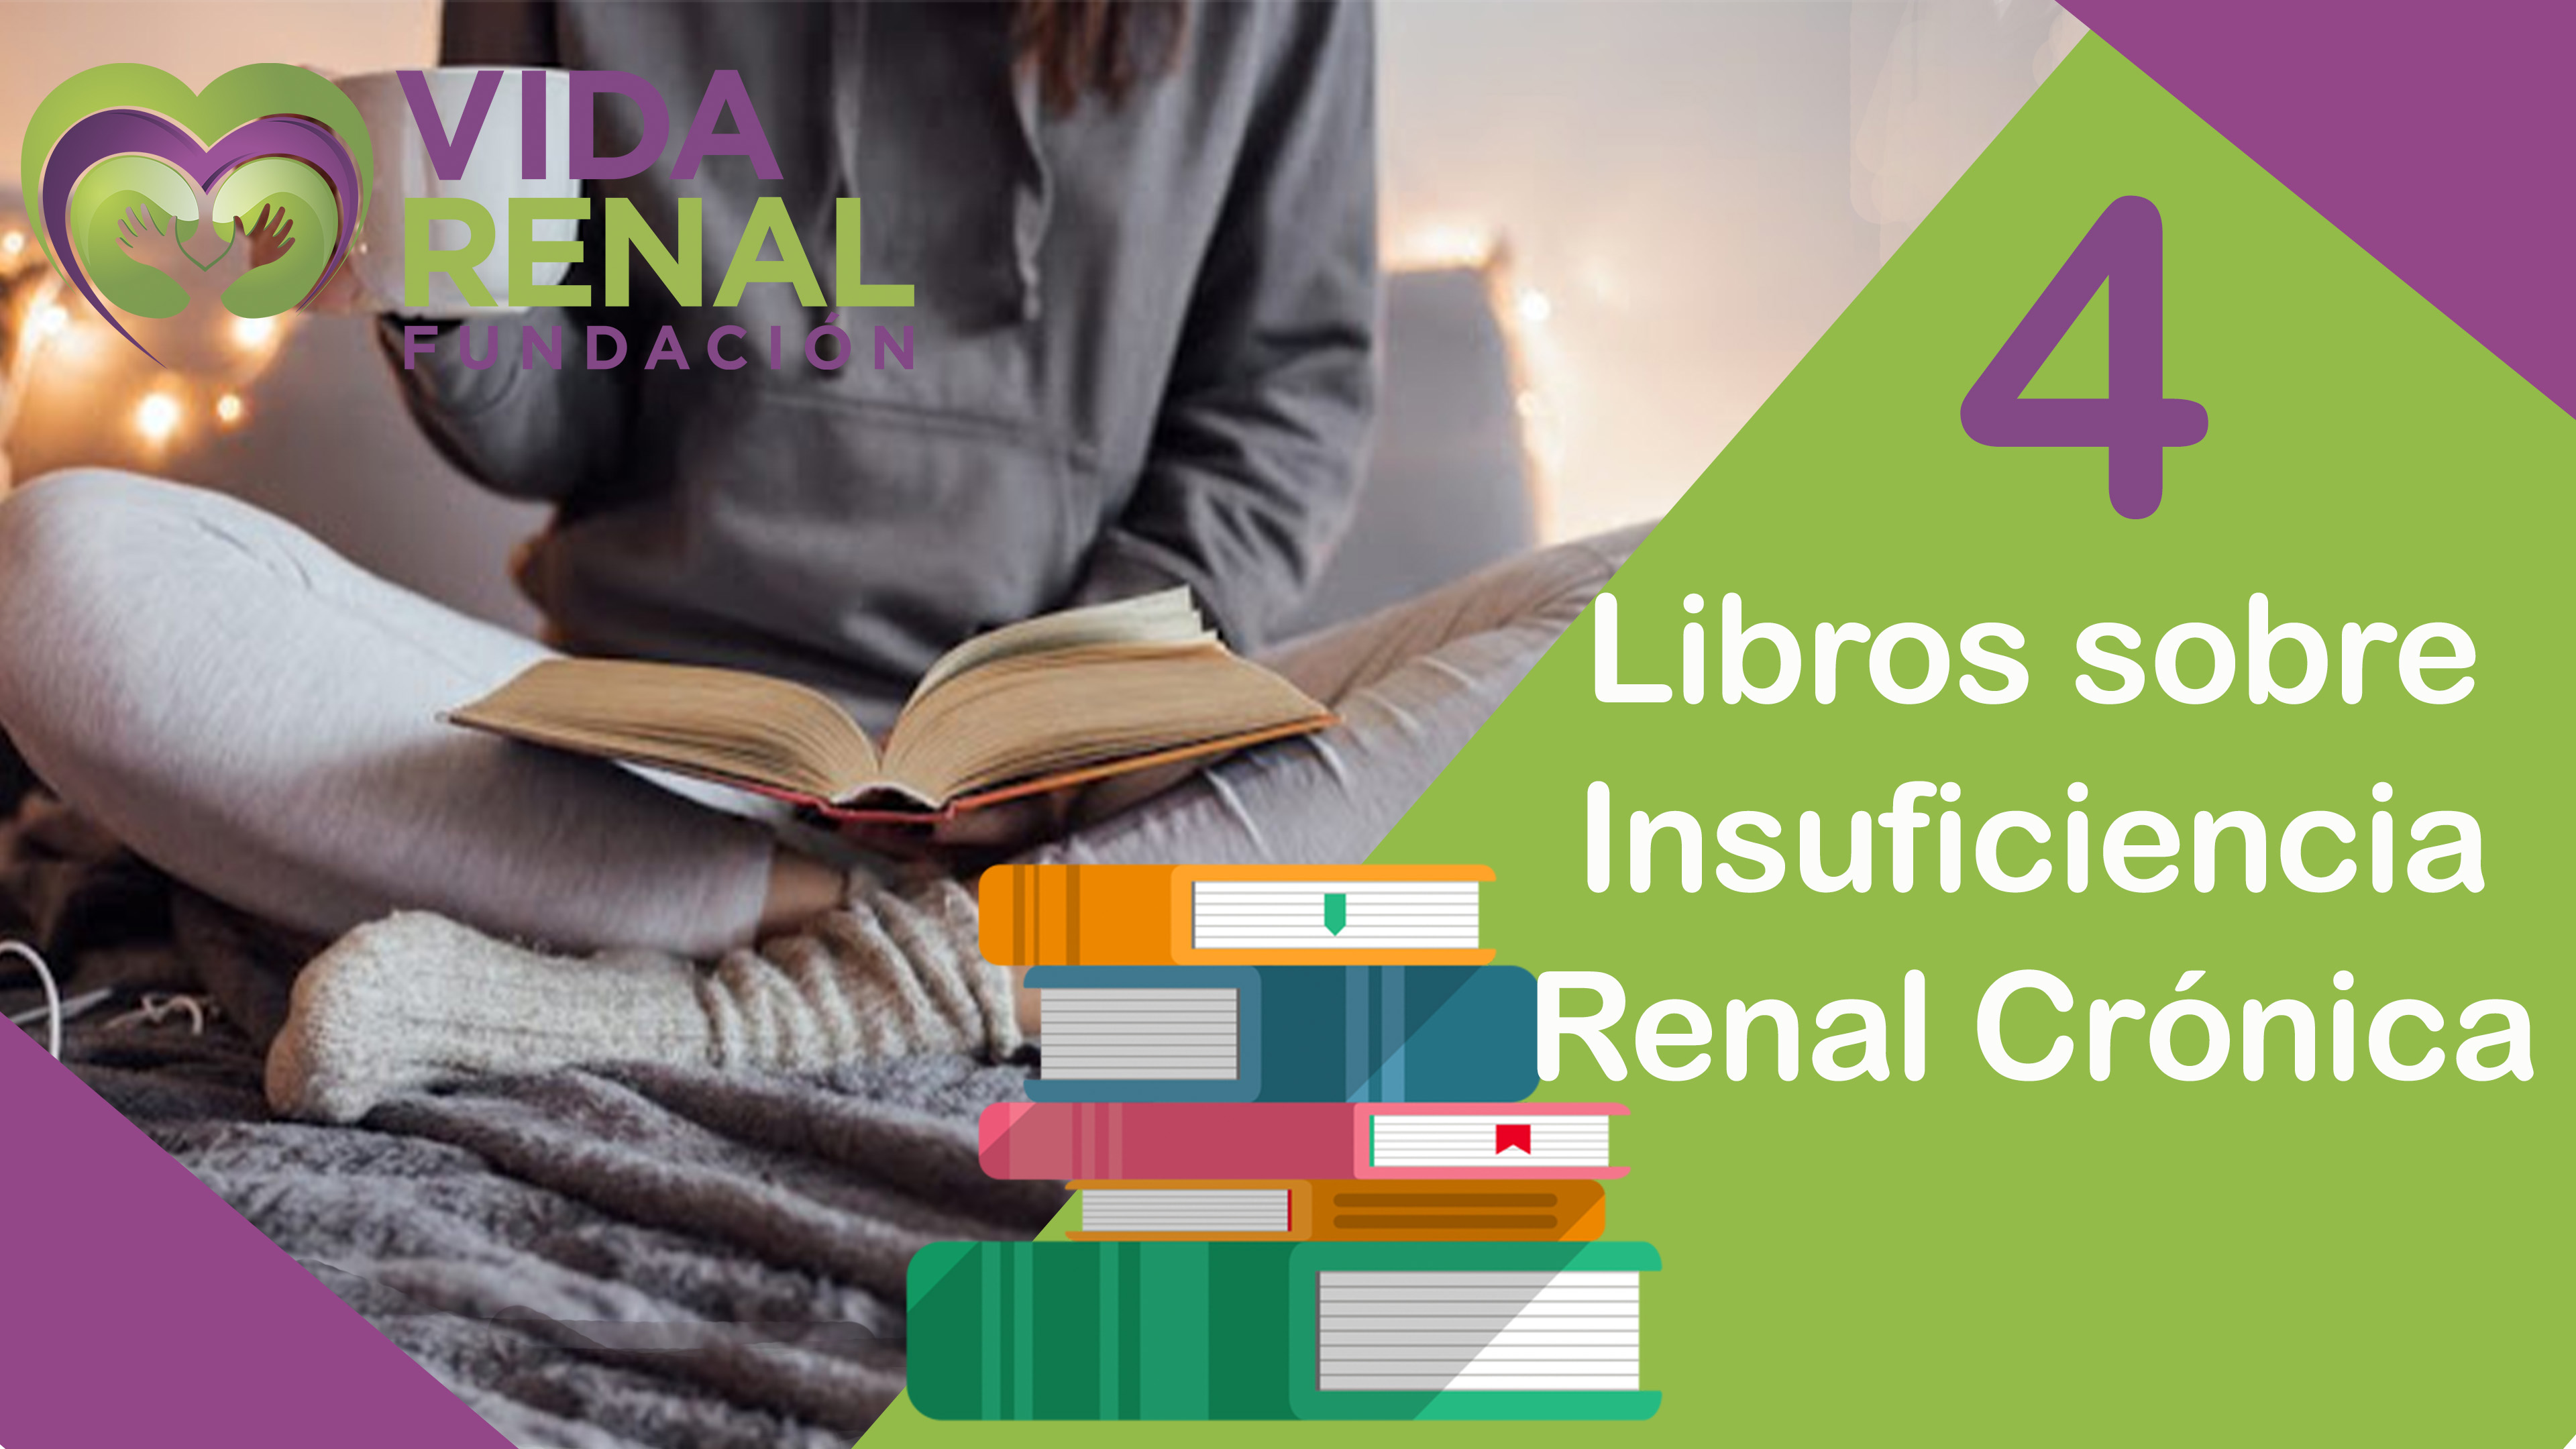 Libros sobre Insuficiencia Renal Crónica. - Vida Renal